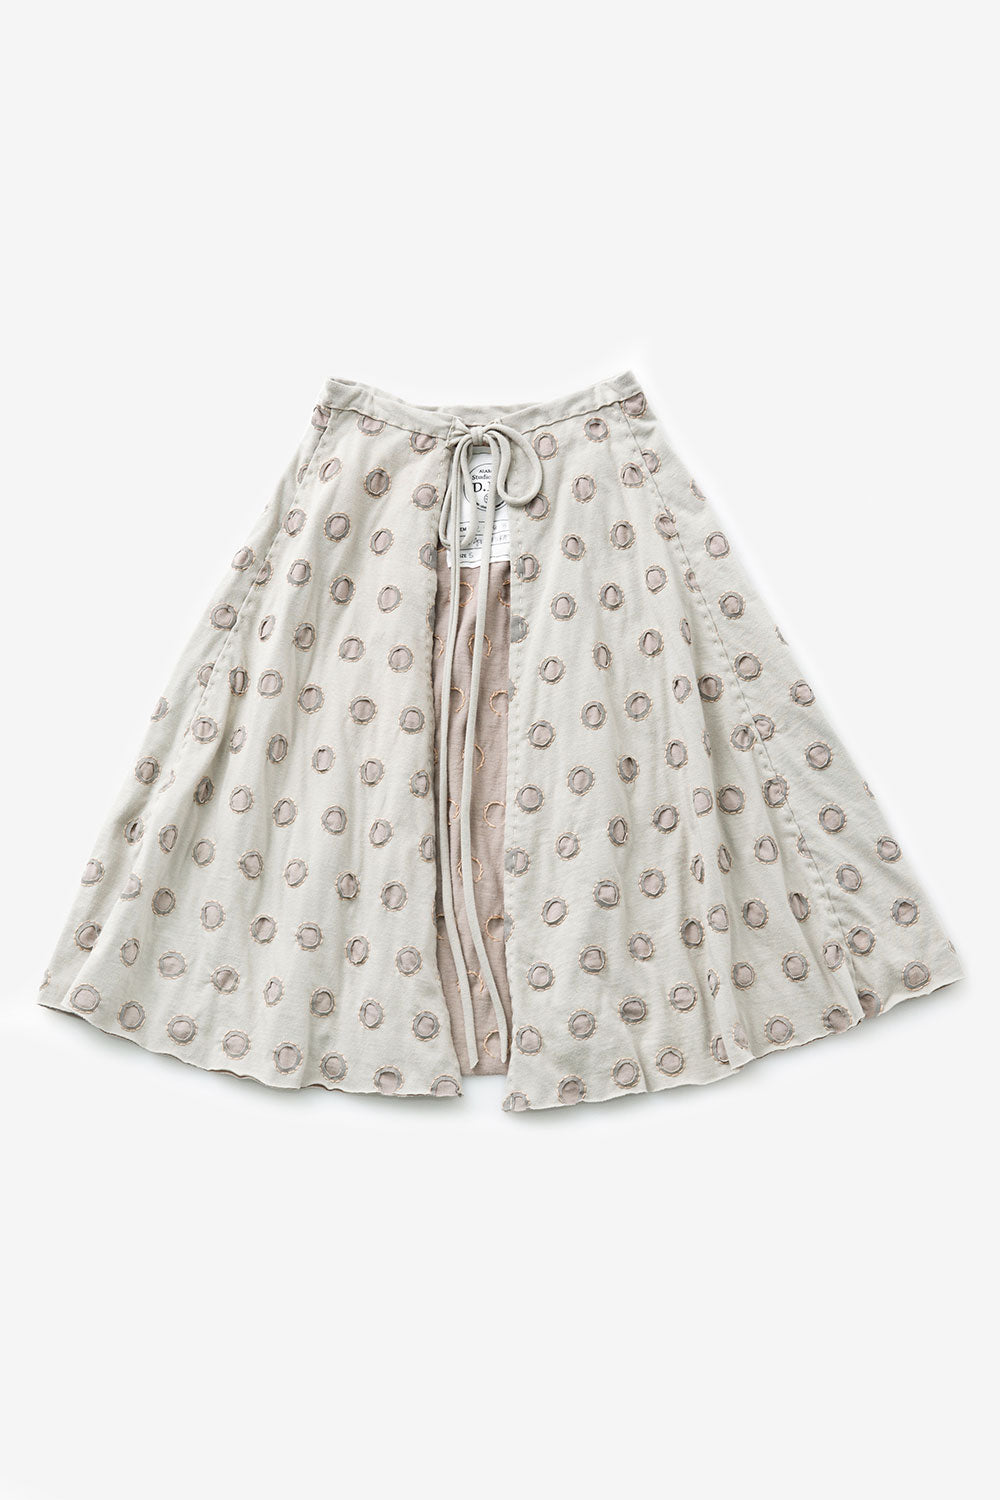 https://cdn.shopify.com/s/files/1/0411/9864/9508/products/the-school-of-making--full-wrap-skirt-pattern--maker-supplies--polka-dot-stencil.jpg?v=1677104498